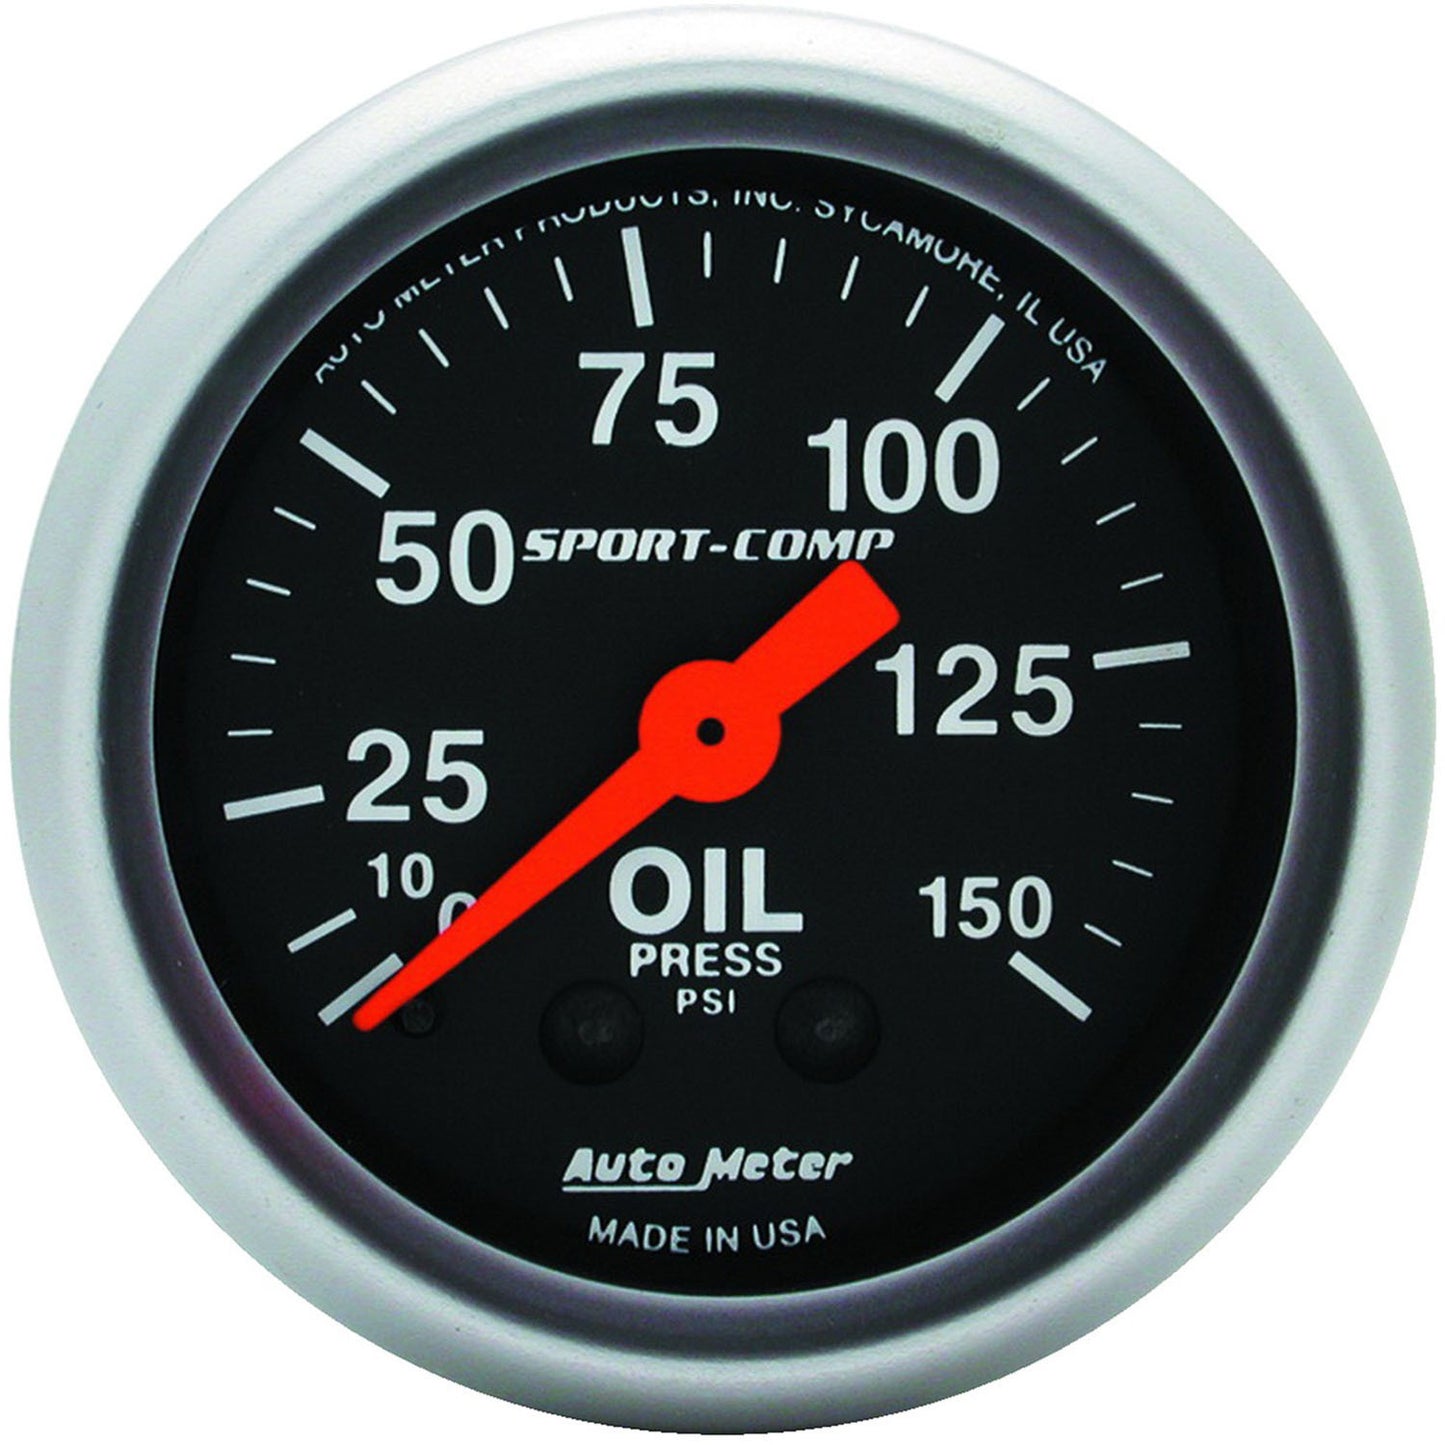 AMT-3323 Autometer Gauge, Sport-Comp, Oil Pressure, 2 1/16 in., 150psi, Mechanical, Analog, Each